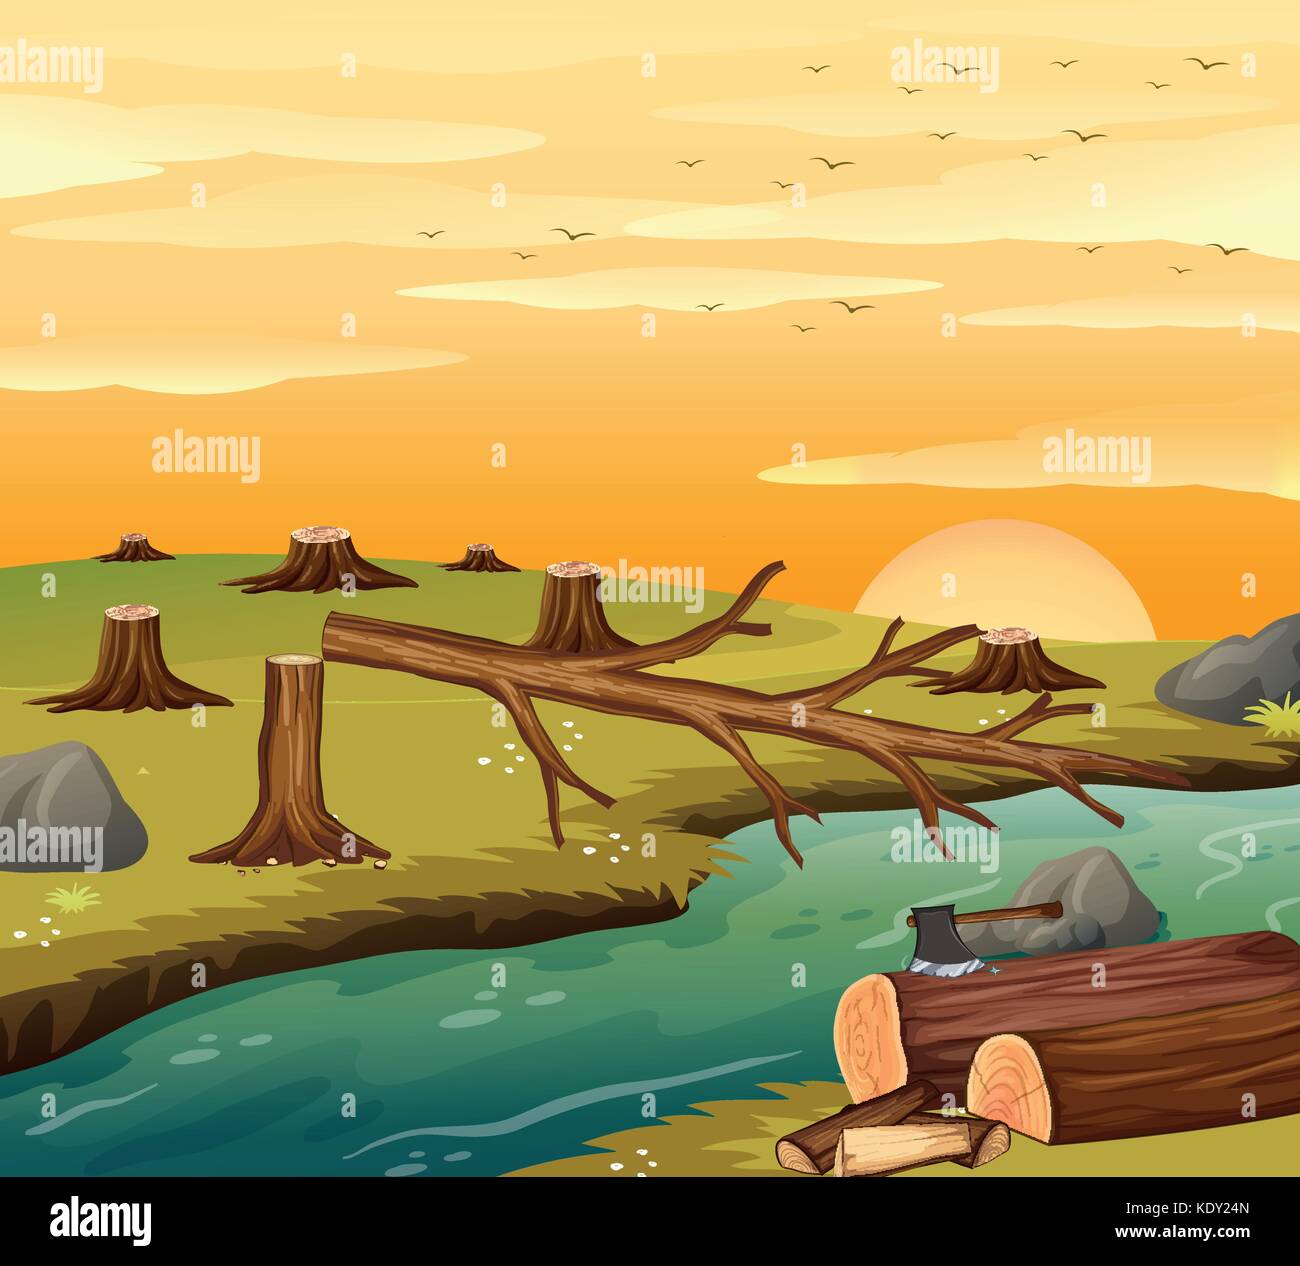 Deforestation scene at sunset illustration Stock Vector Image & Art - Alamy